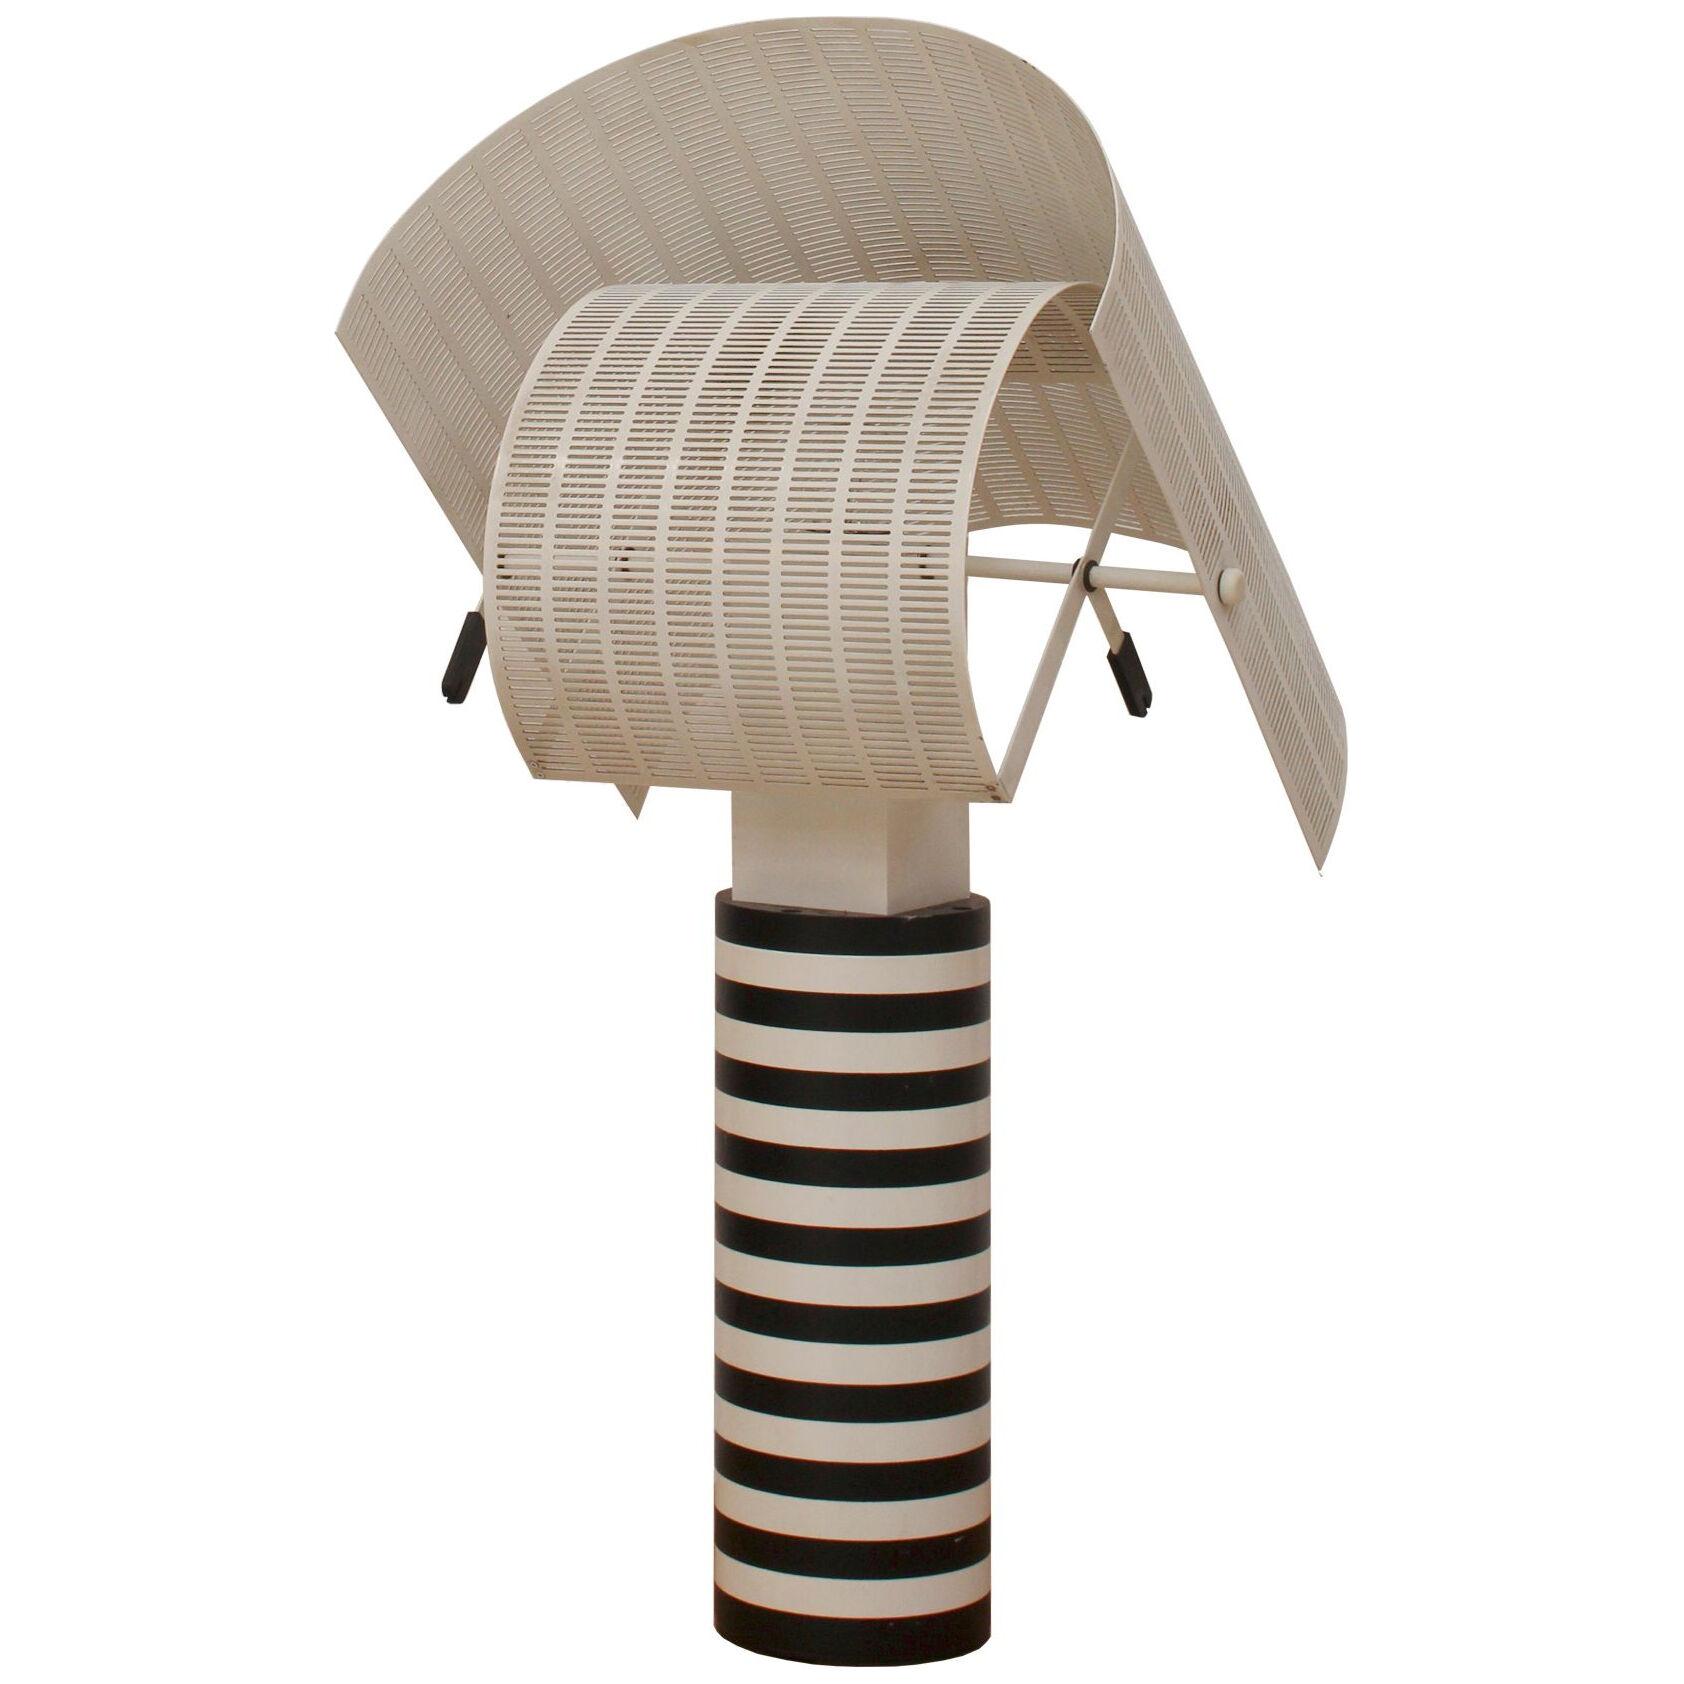 Shogun table lamp designed by Mario Botta for Artemide 